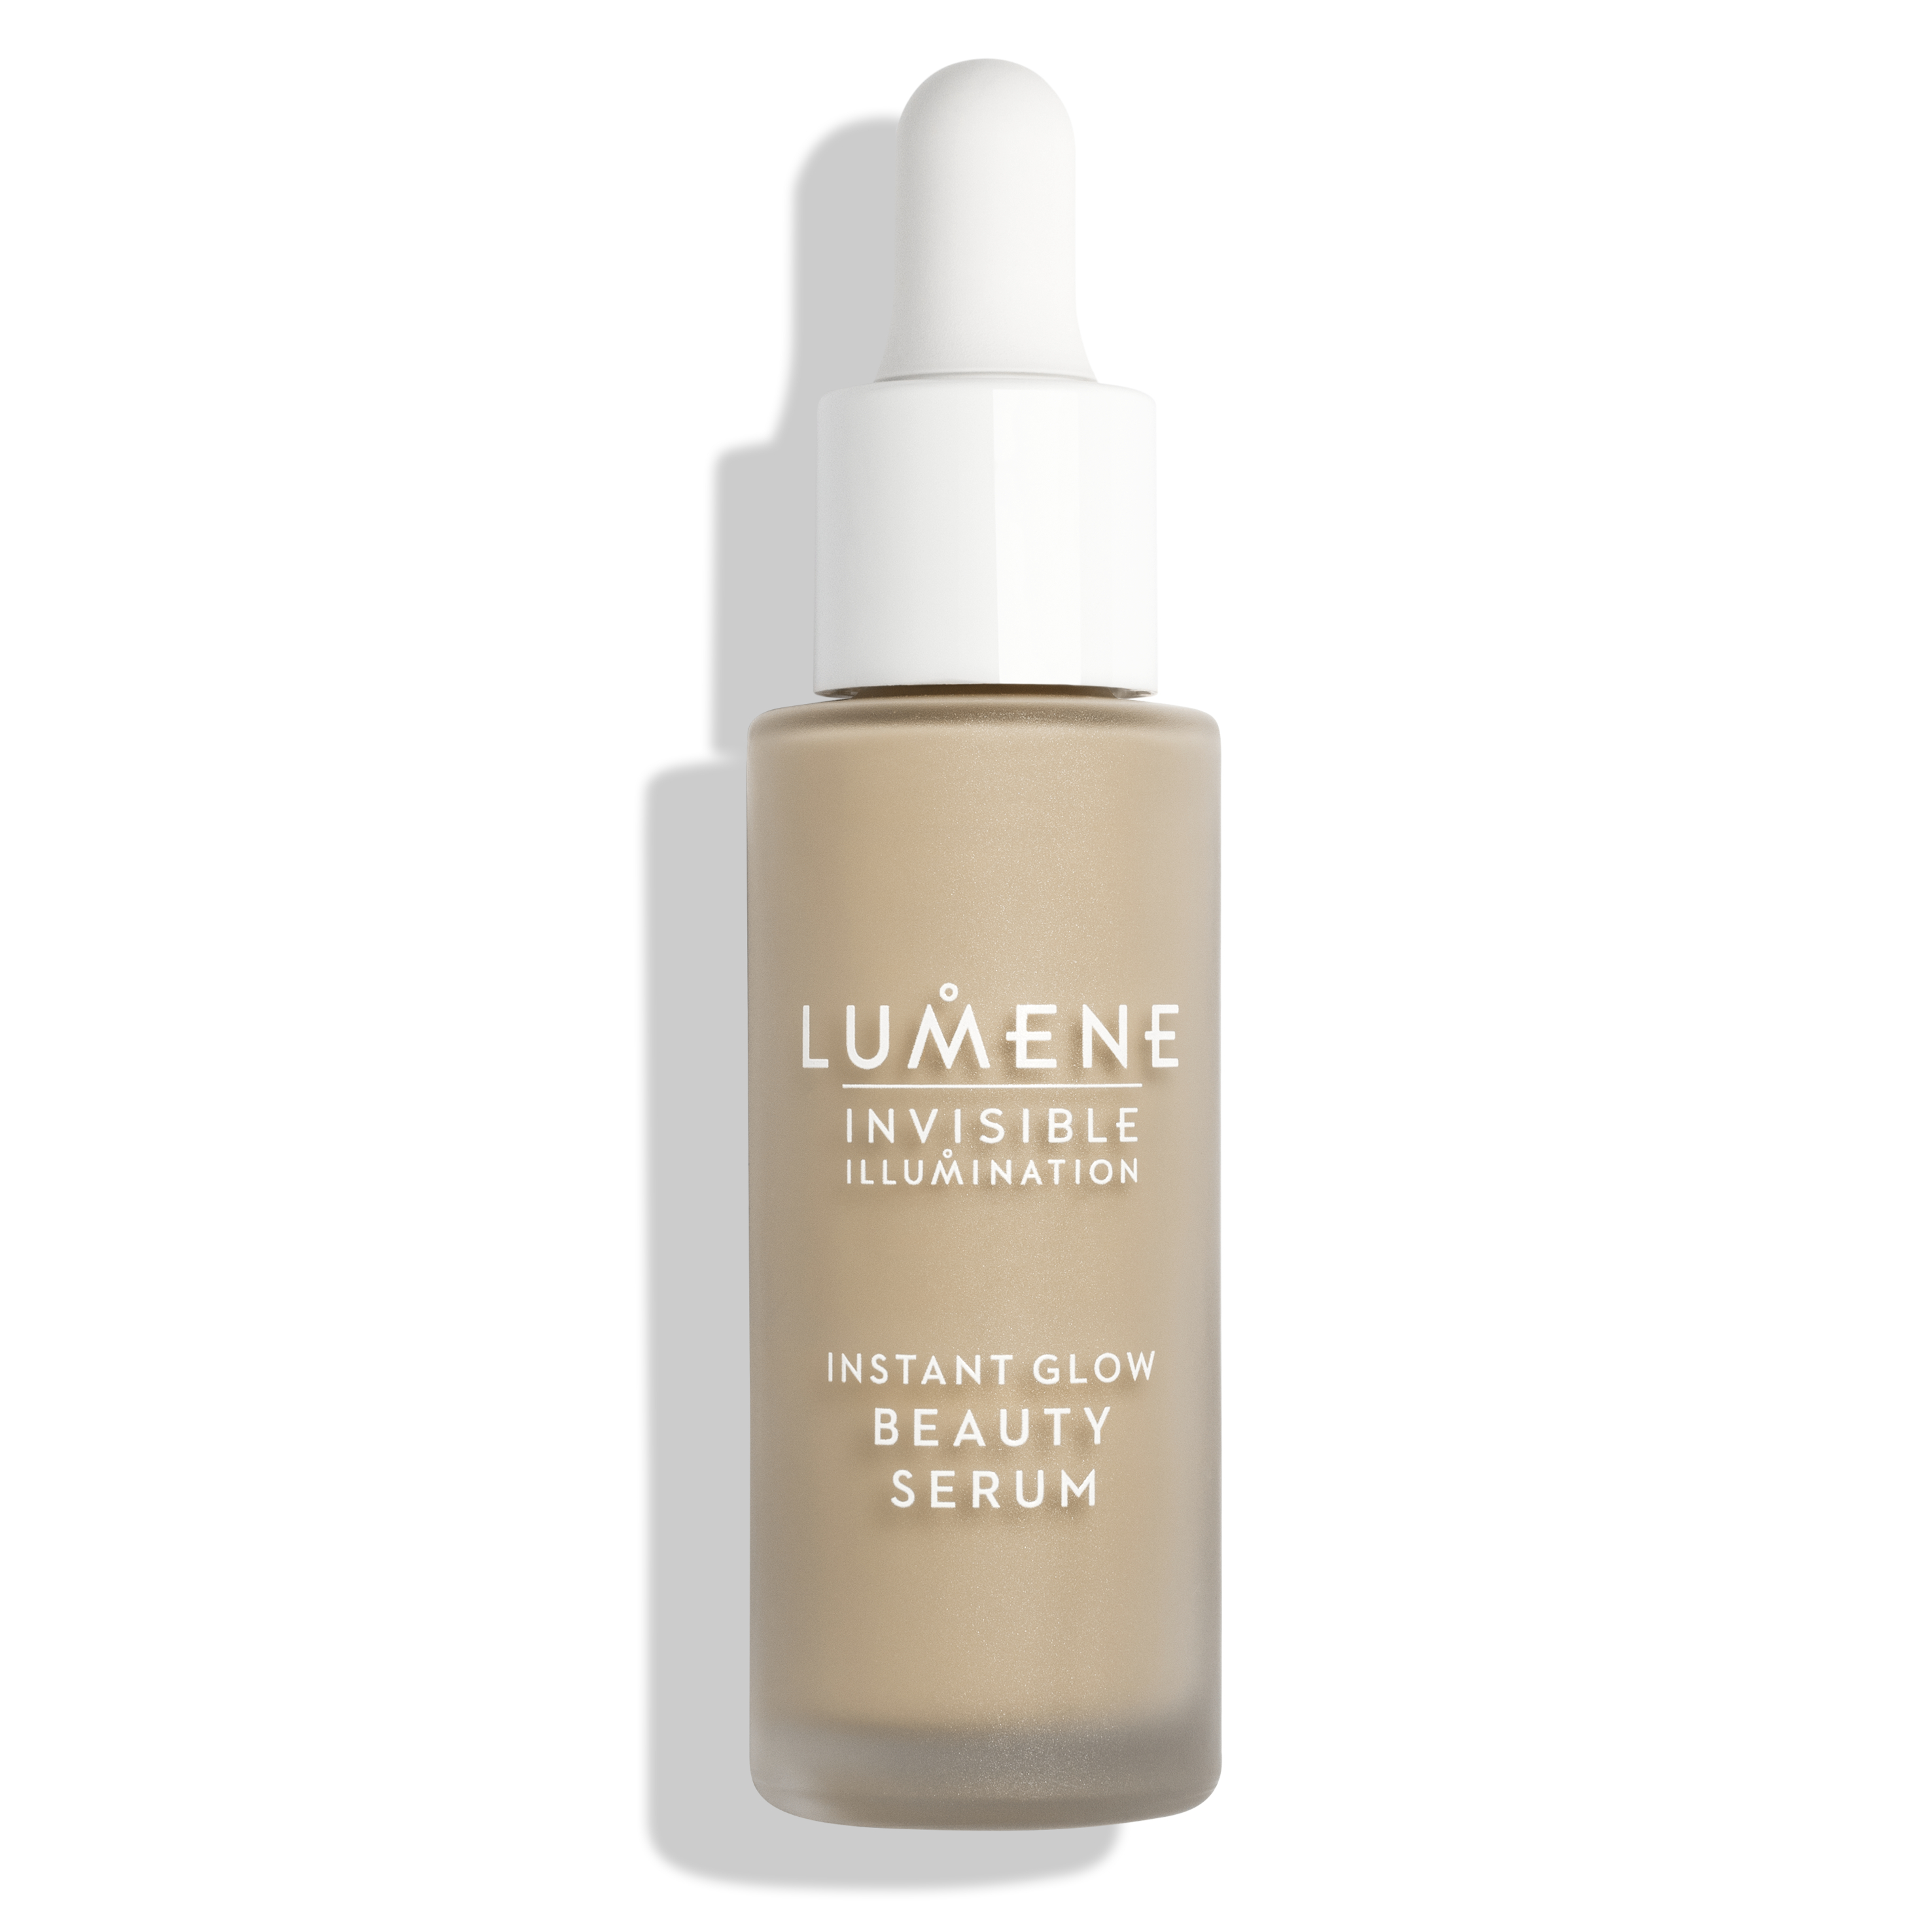 Lumene Invisible Illumination Instant Glow Beauty Serum, Universal Medium, 30 ml